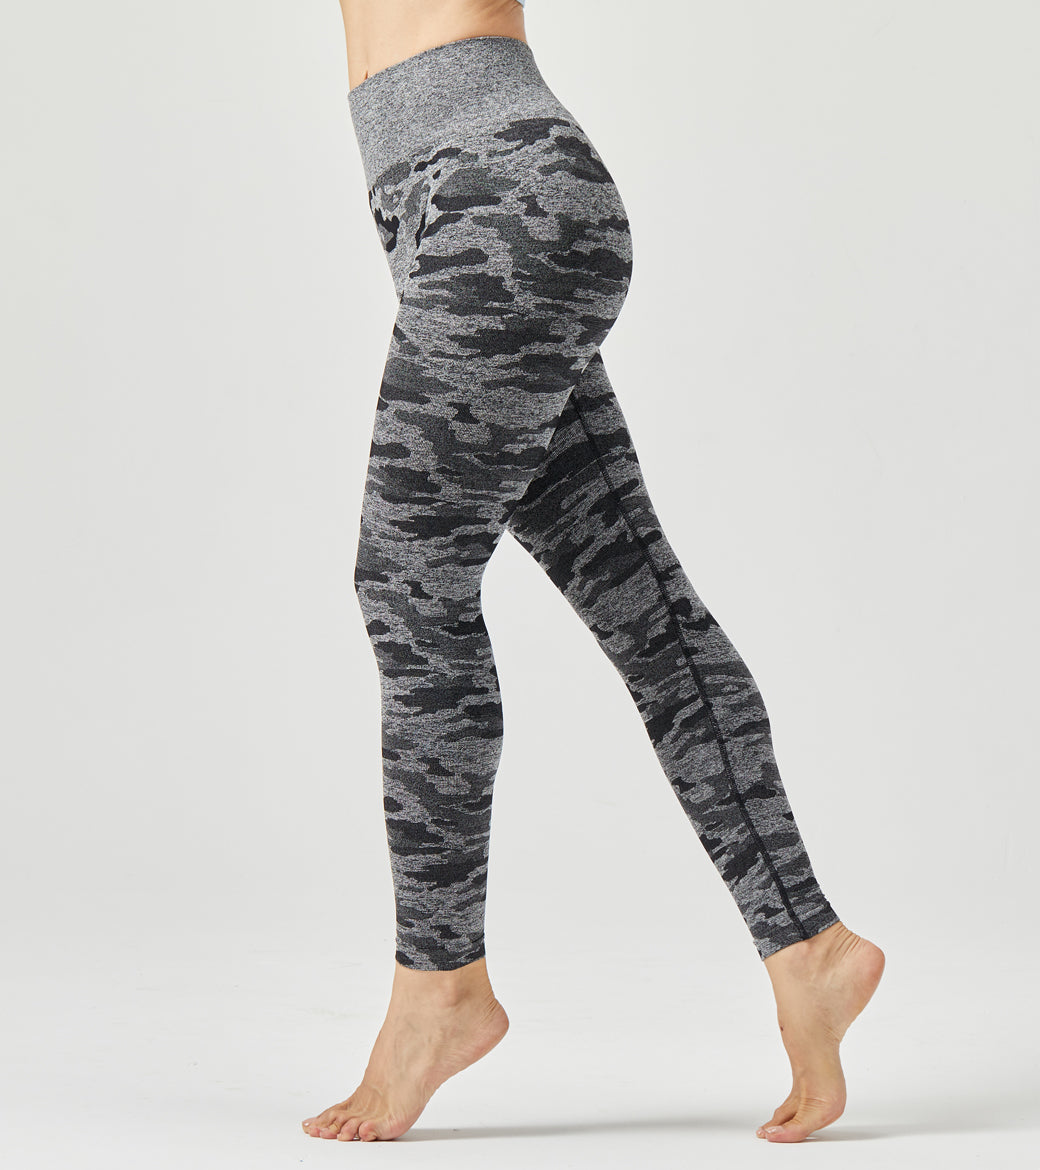 LOVESOFT Women's Grey Camo Seamless Leggings High Waist Hip-lifting Pants